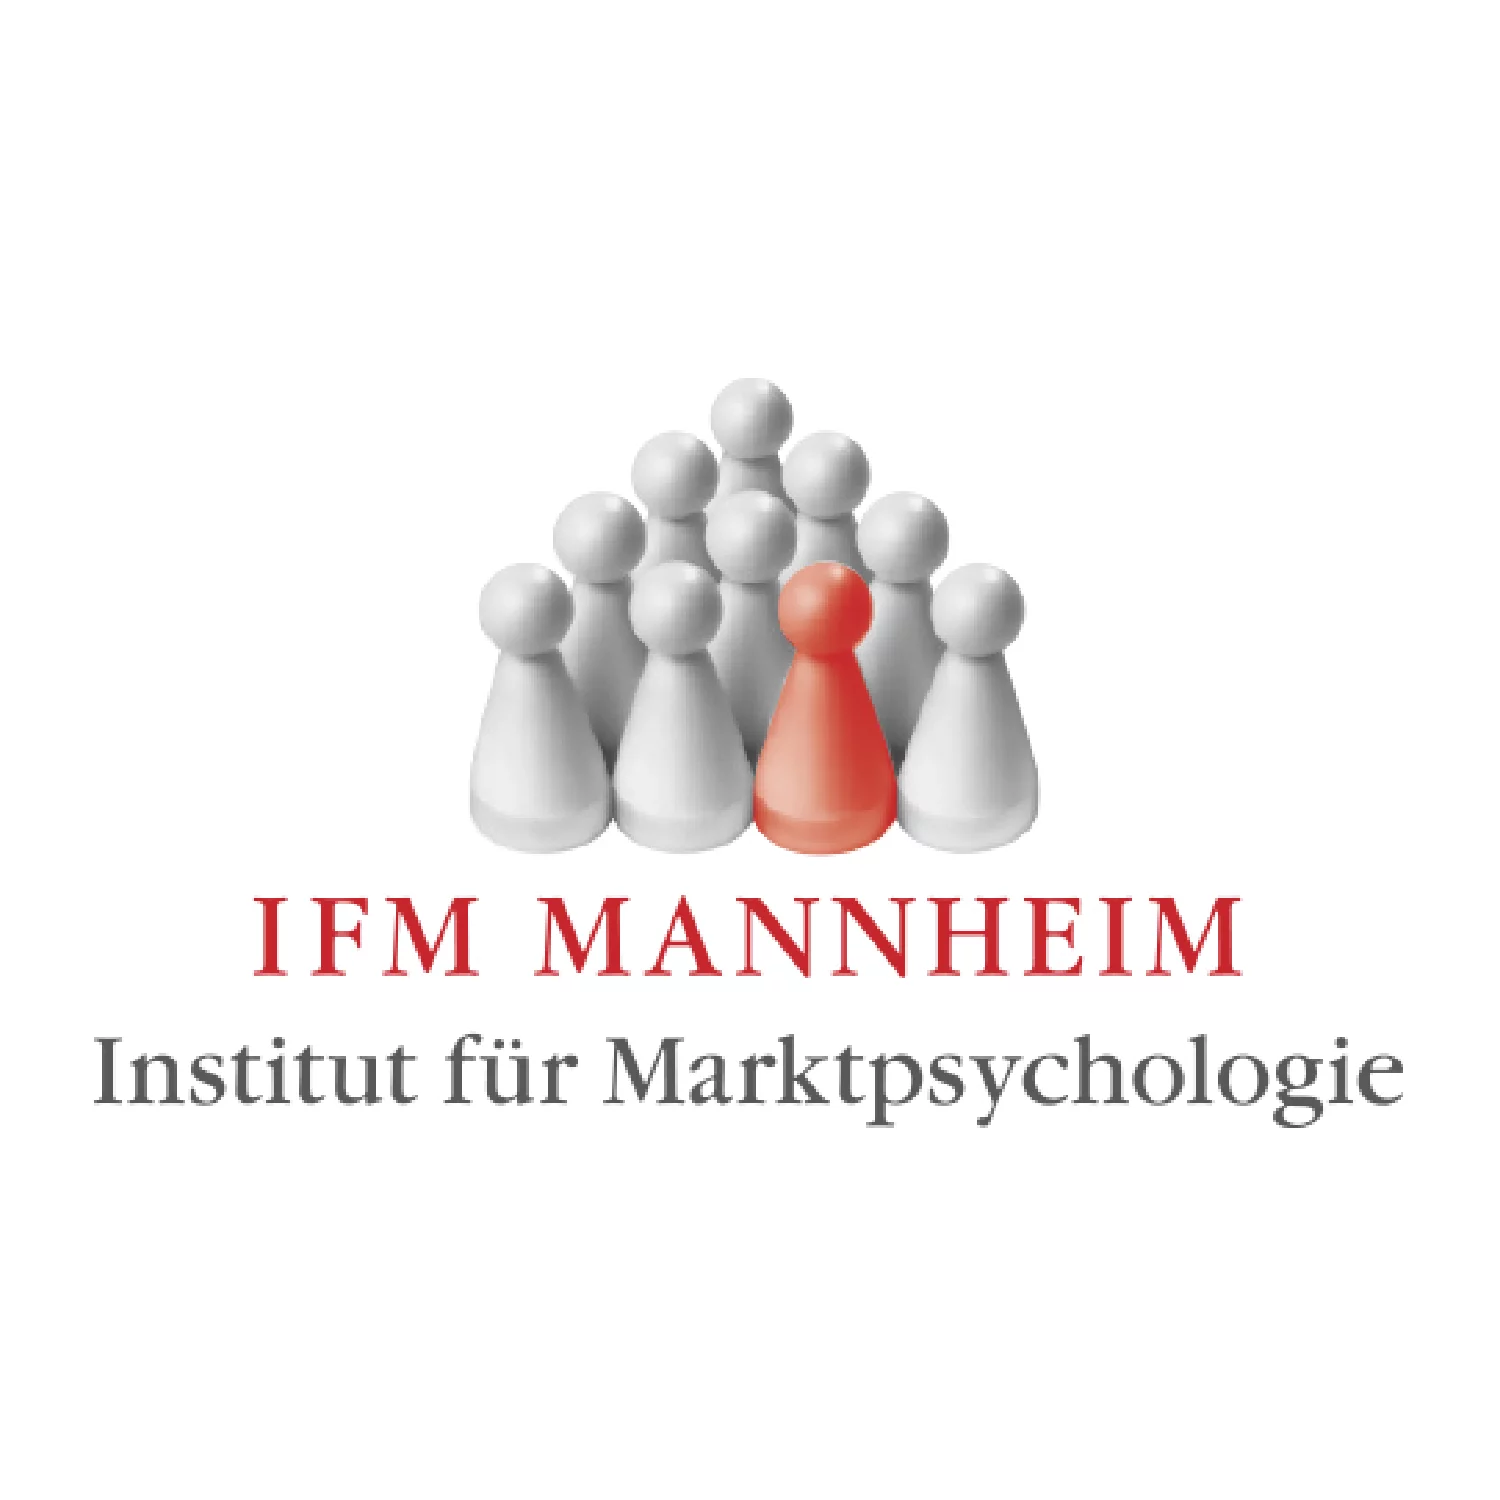 IFM Mannheim